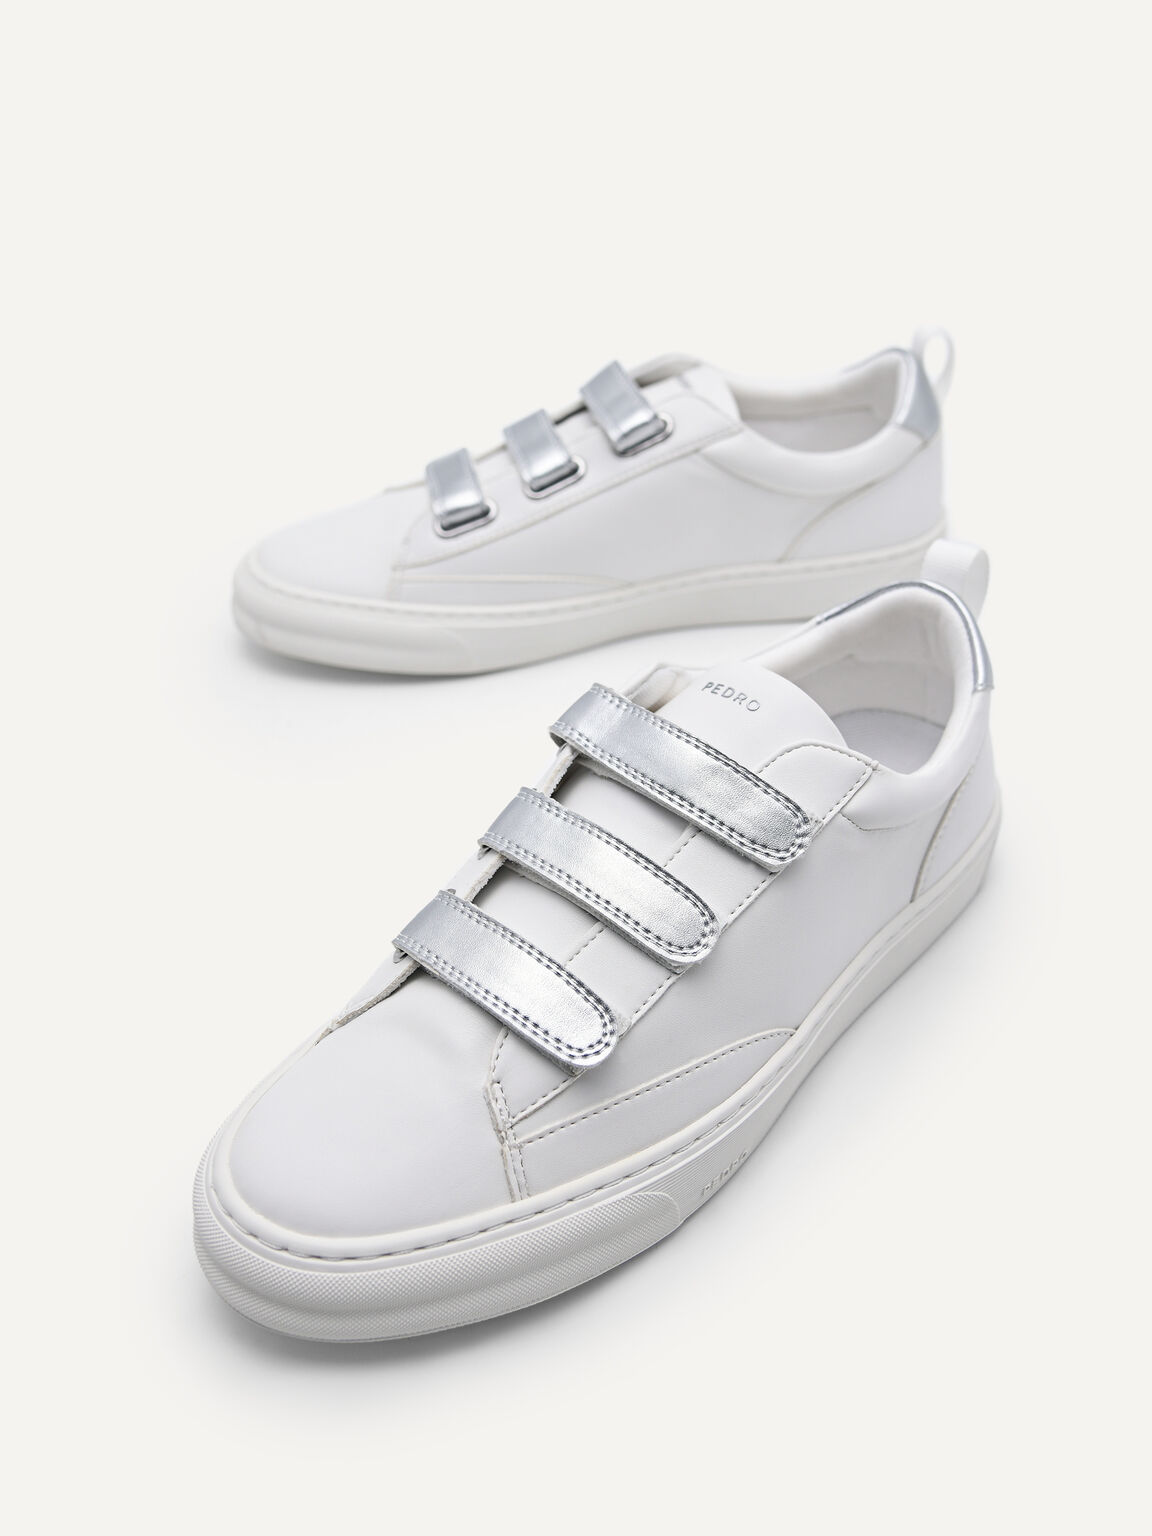 Ridge Velco Strap Sneakers, White